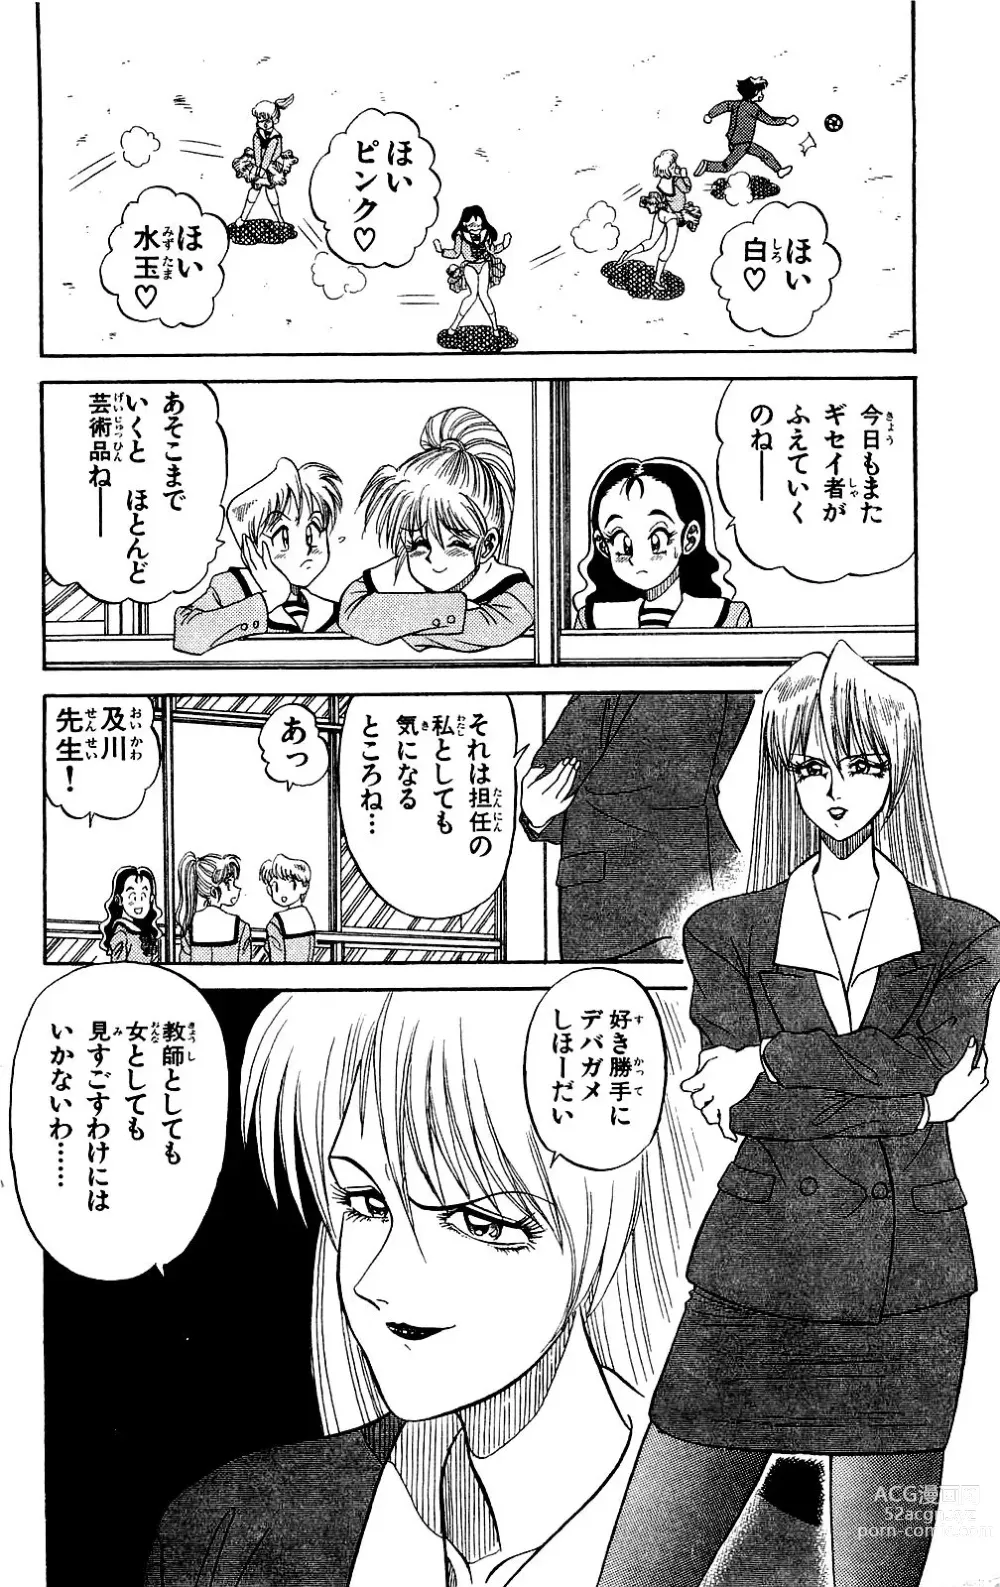 Page 16 of manga Orette Piyoritan Vol. 1